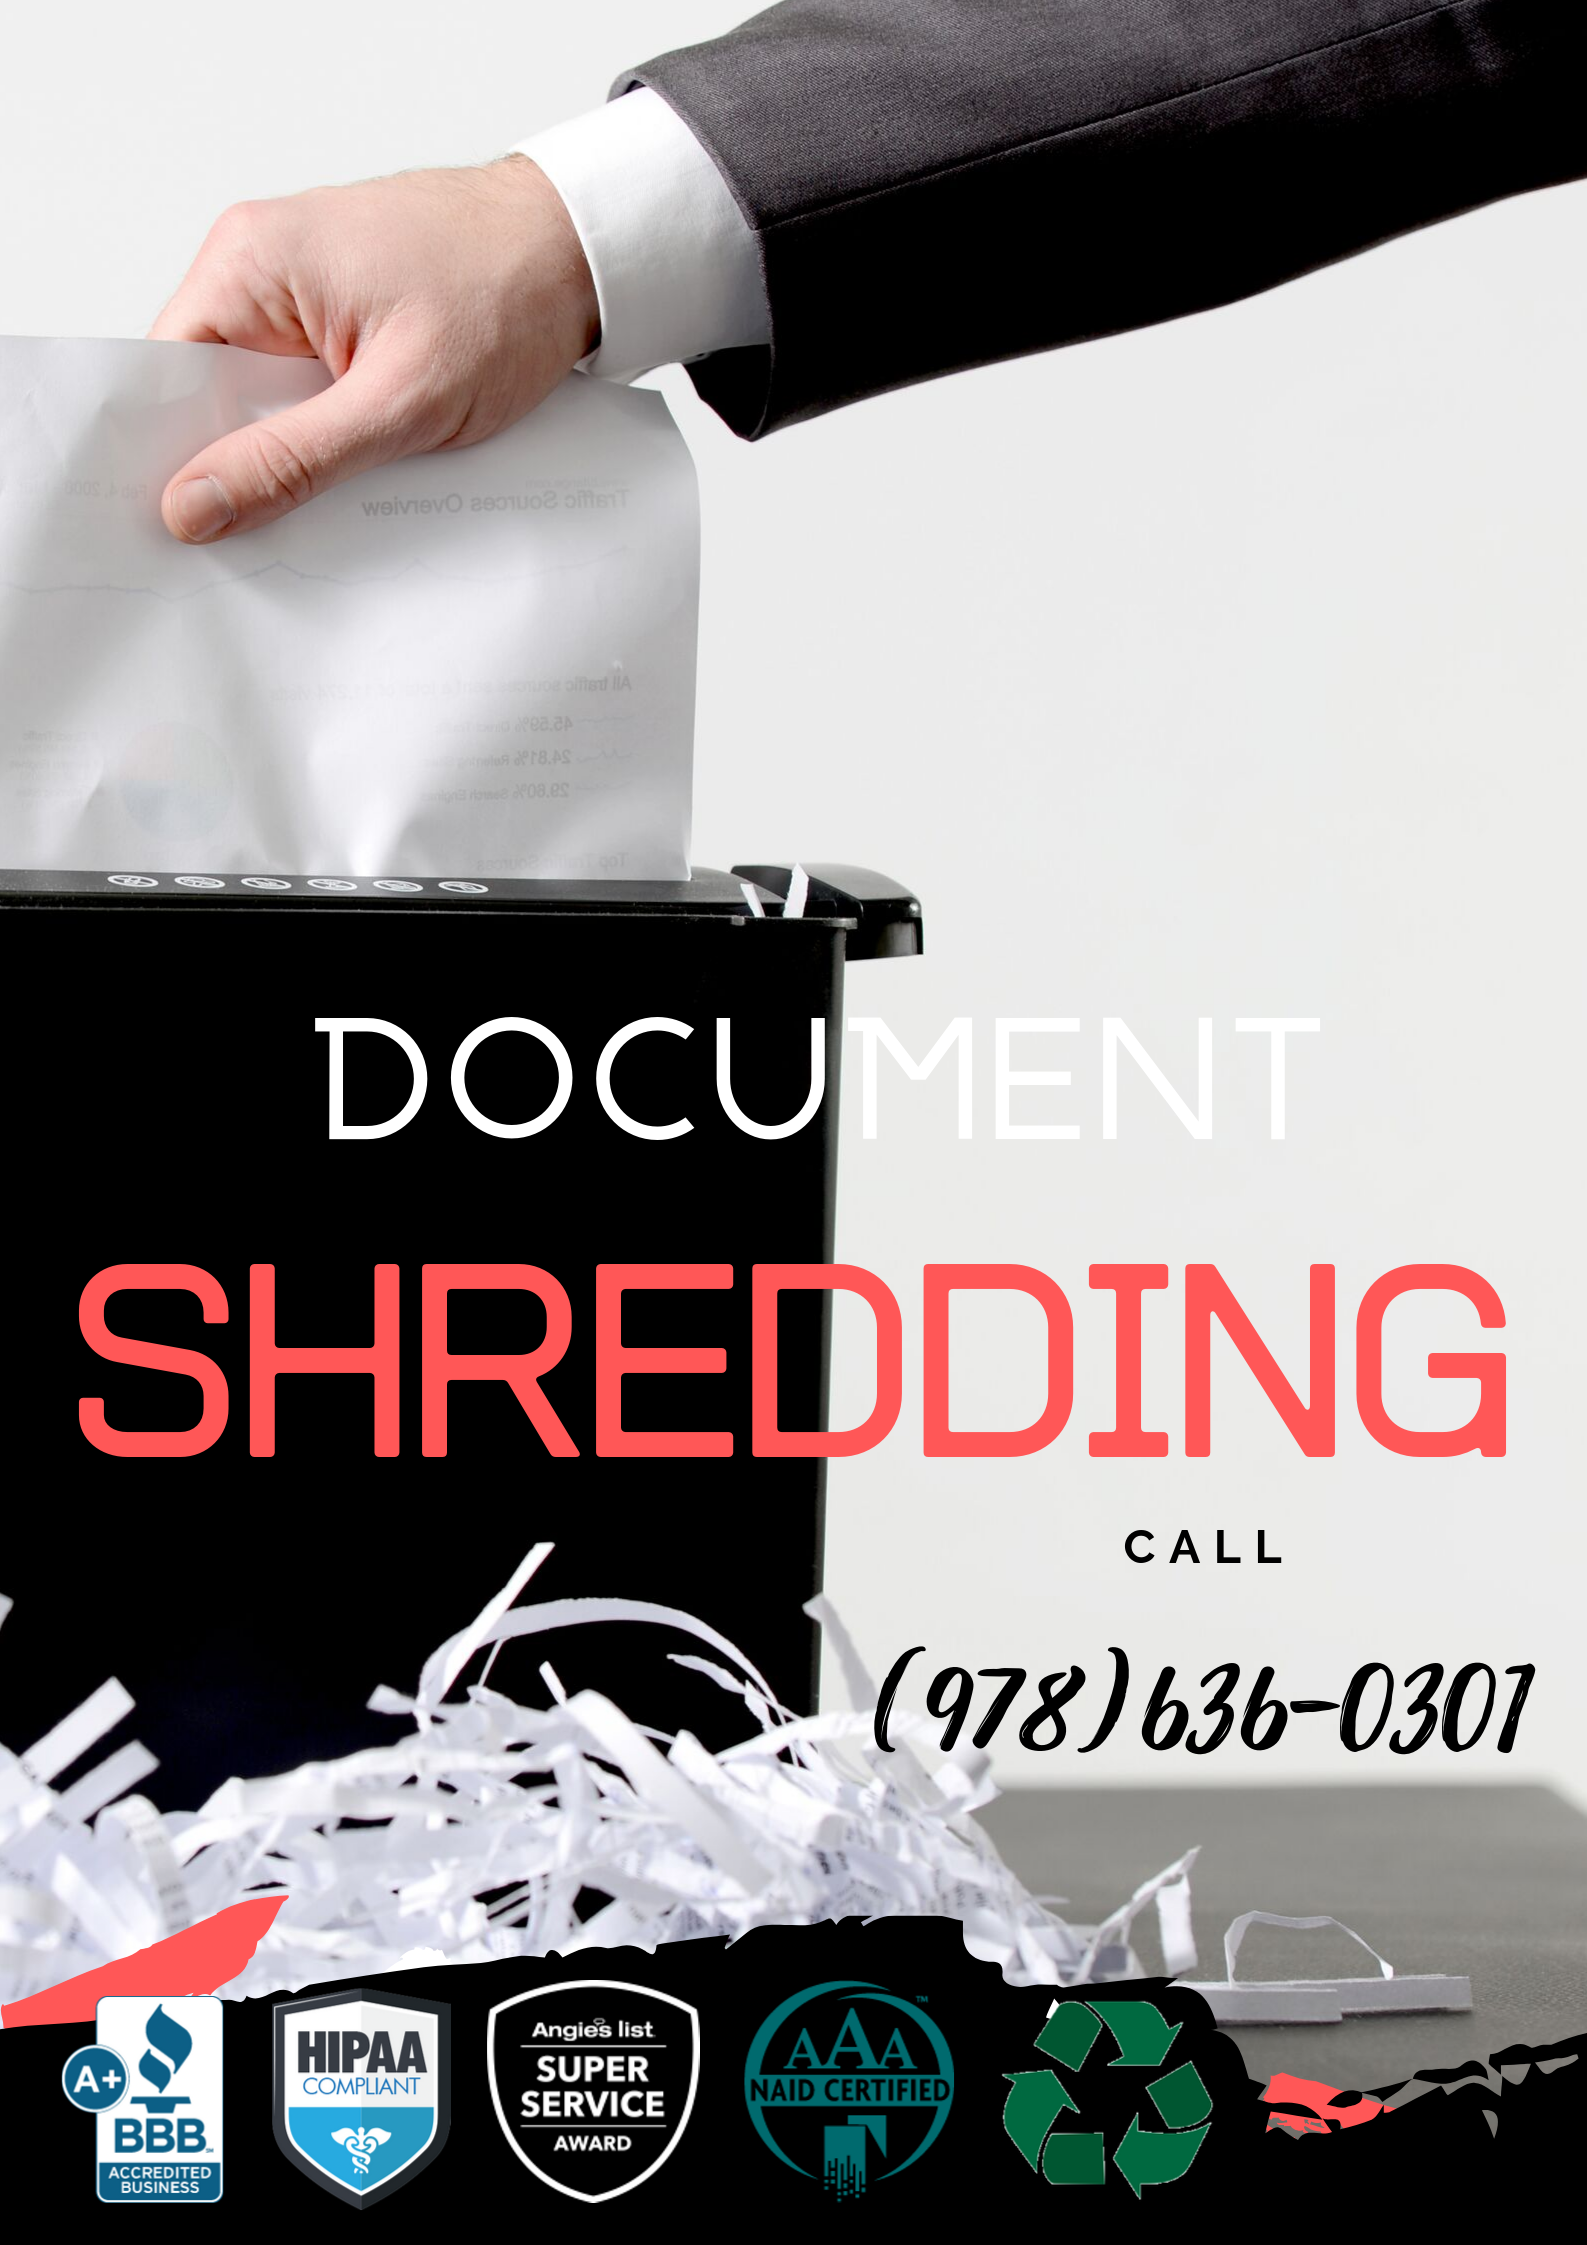 Best Document Shredding Service Near Me - Boston's Favorite Document Shredding Service